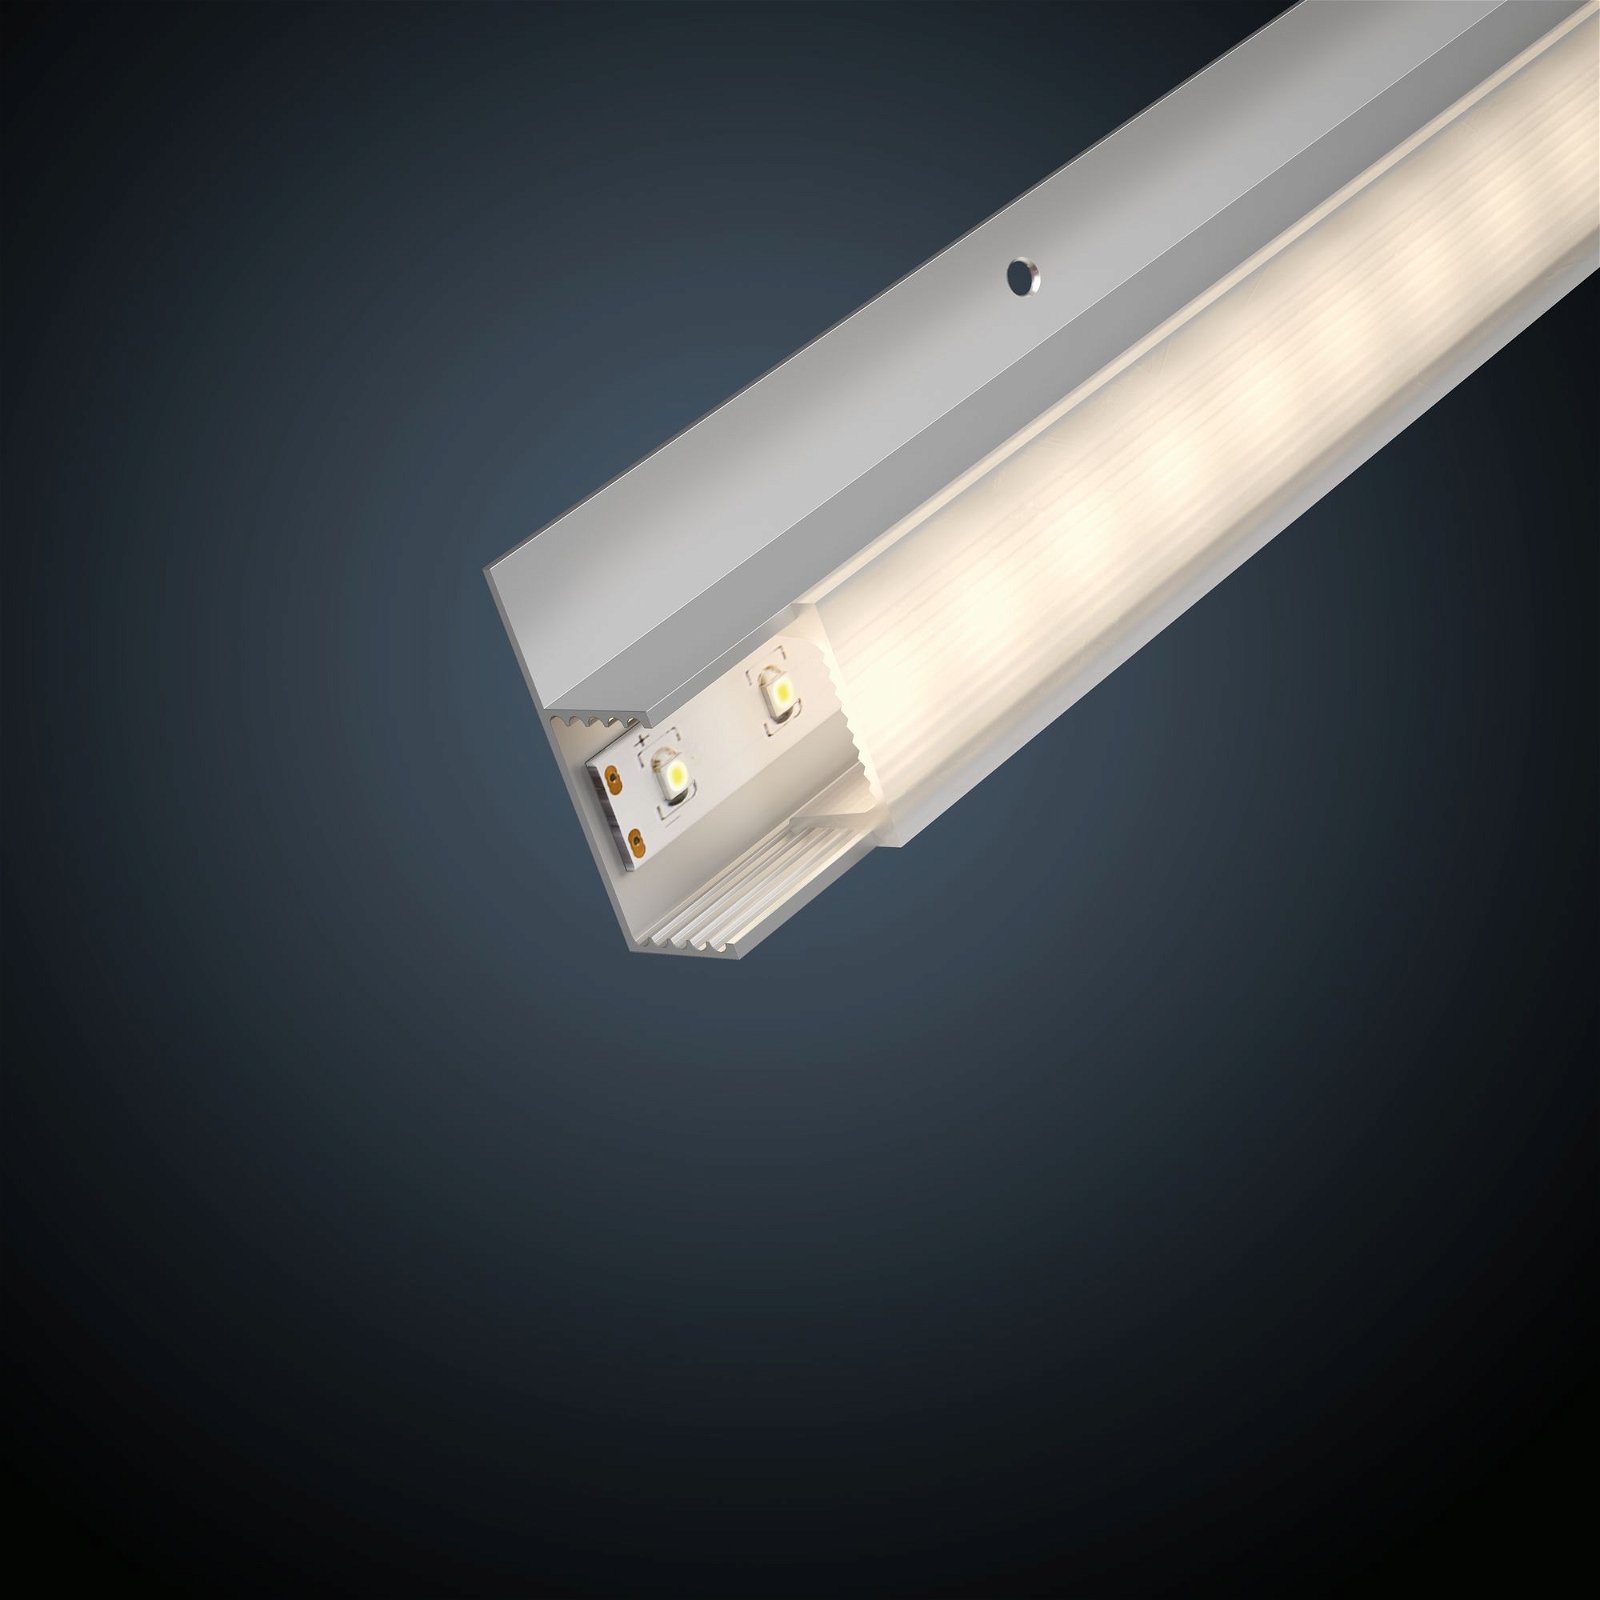 LED Strip Einbauprofil Socle Weißer Diffusor 2m Alu eloxiert/Satin